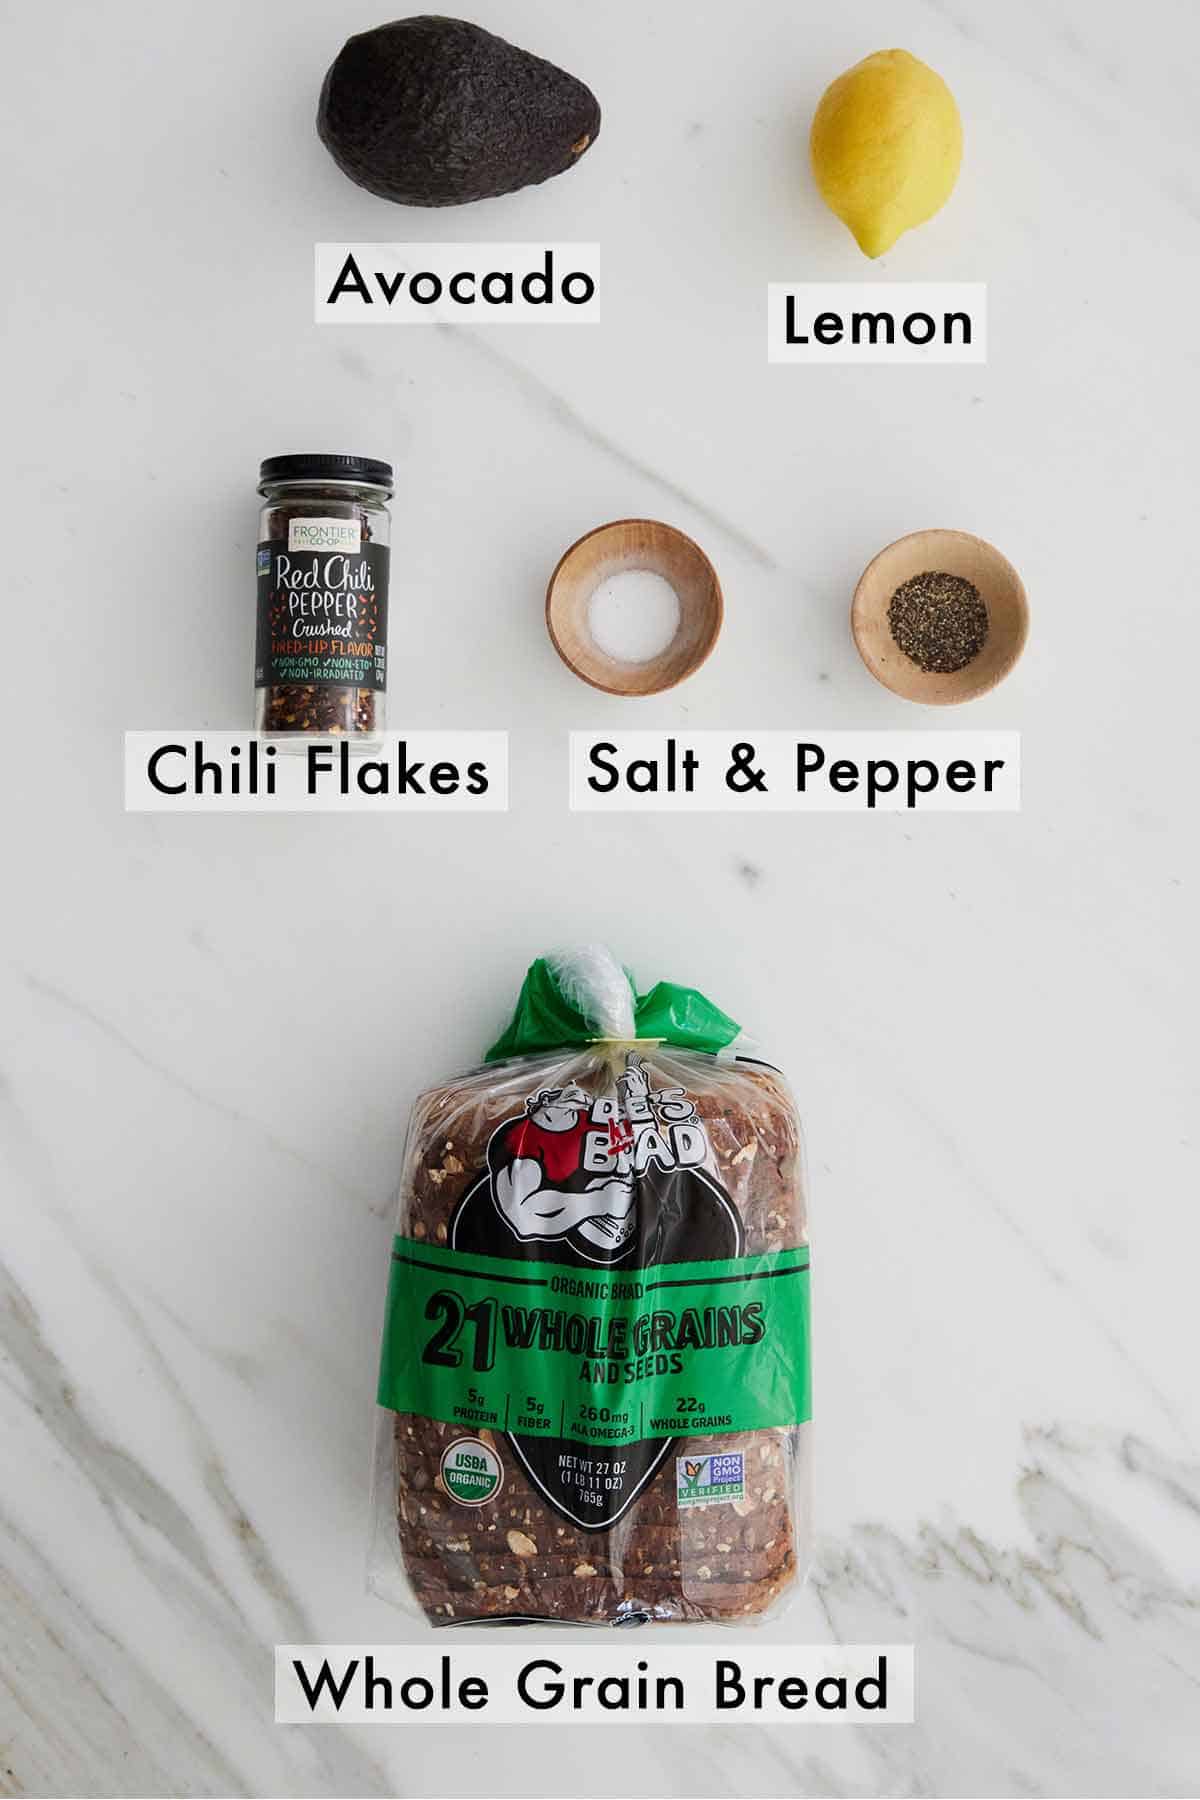 Ingredients needed to make avocado toast.